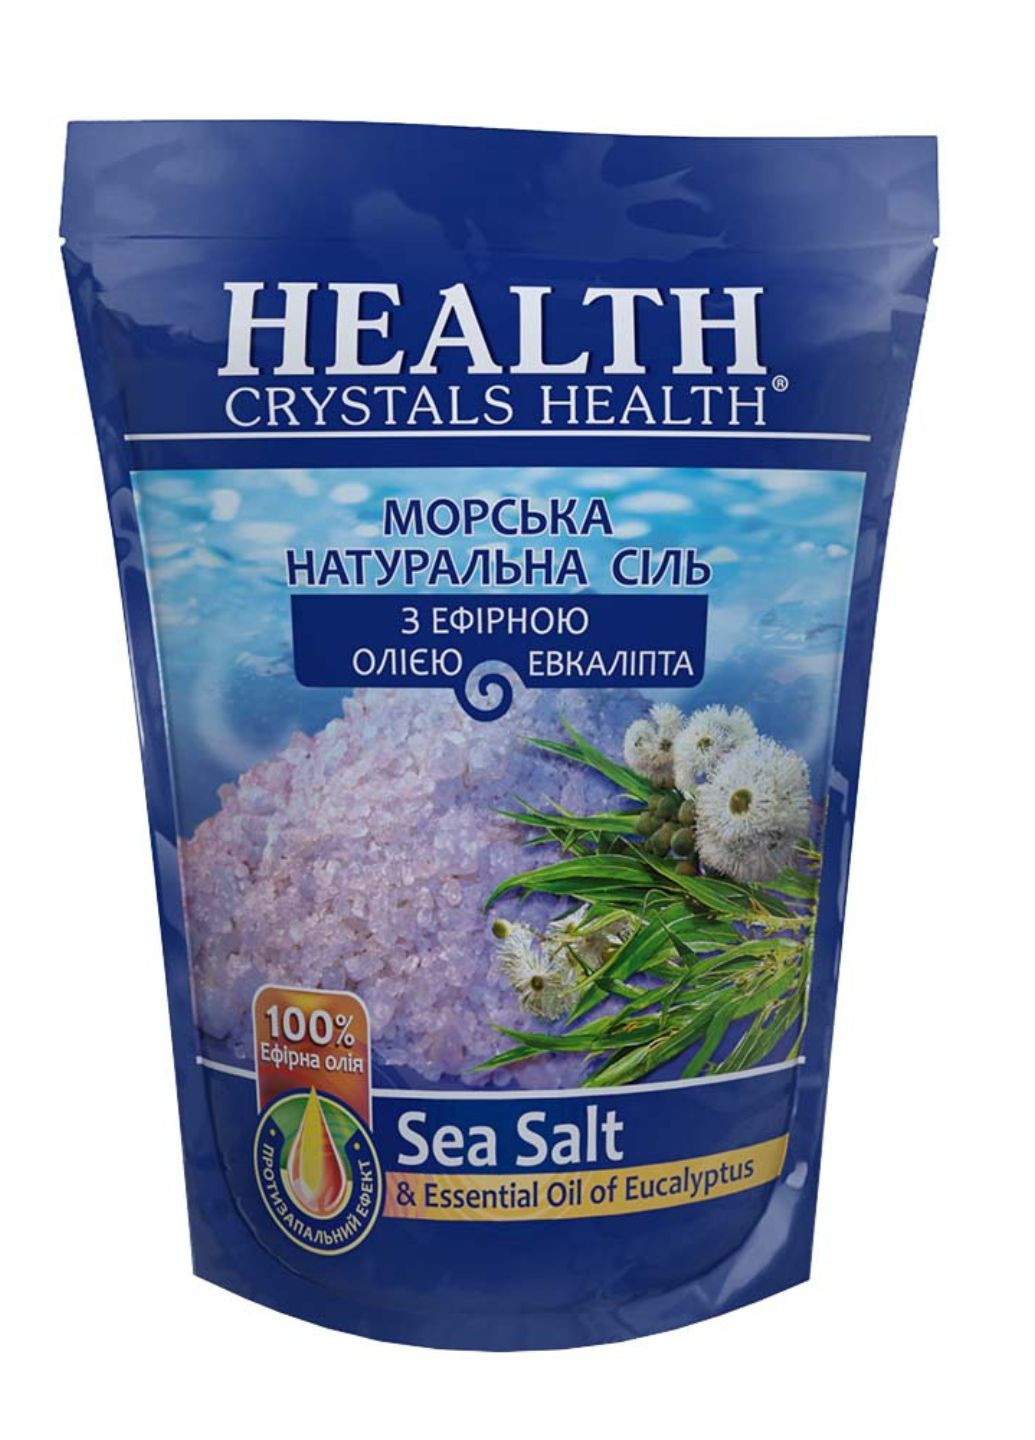 Соль морская натуральная для ванны "Эвкалипт" 500 г Crystals Health (259301102)